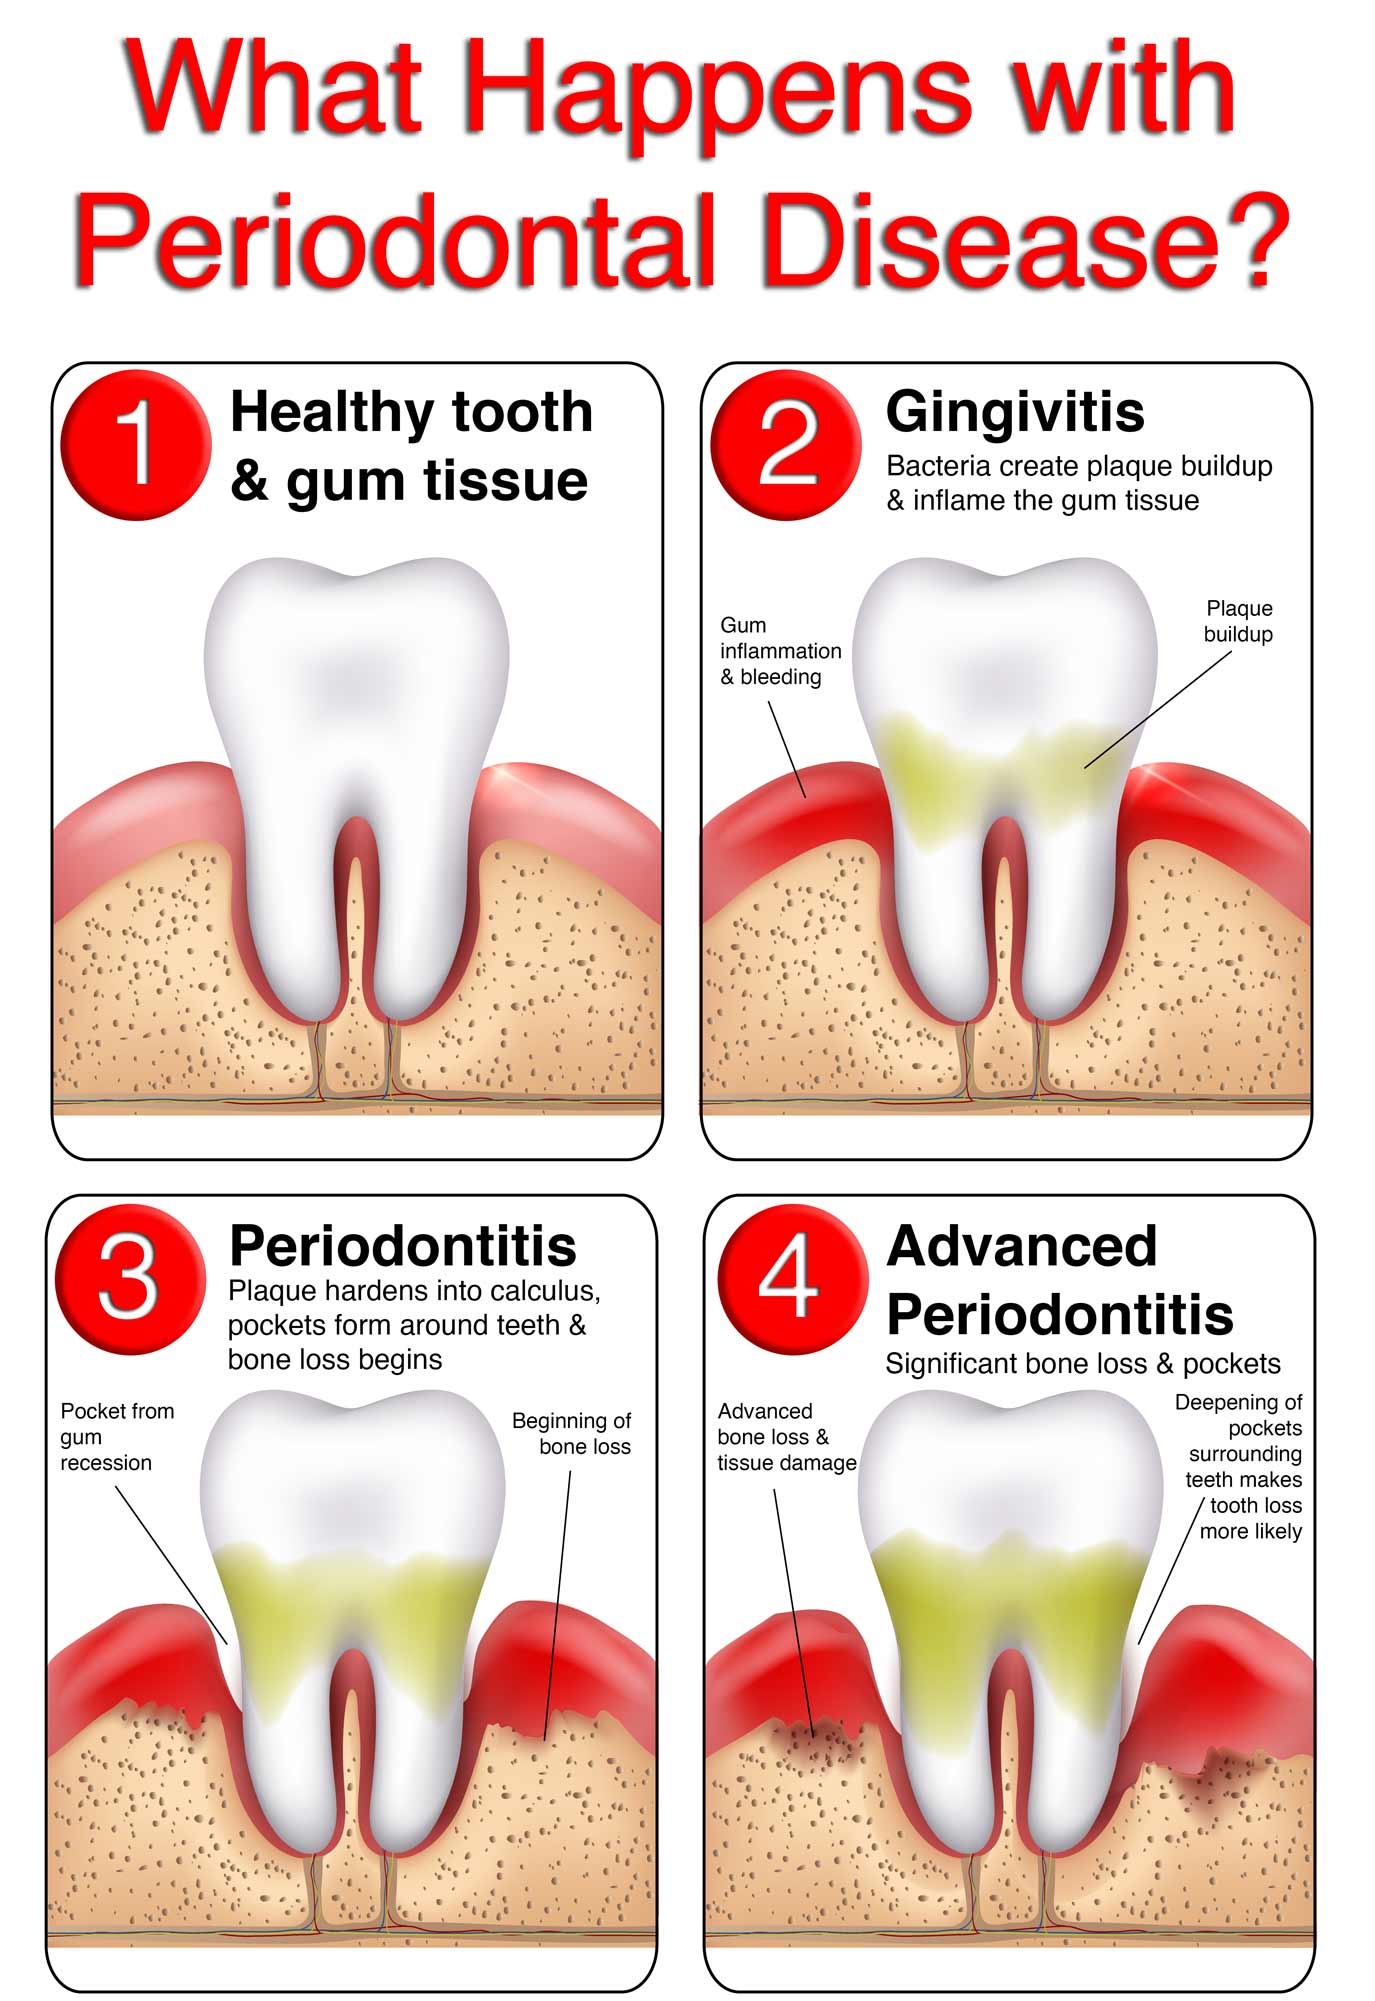 advanced periodontal disease